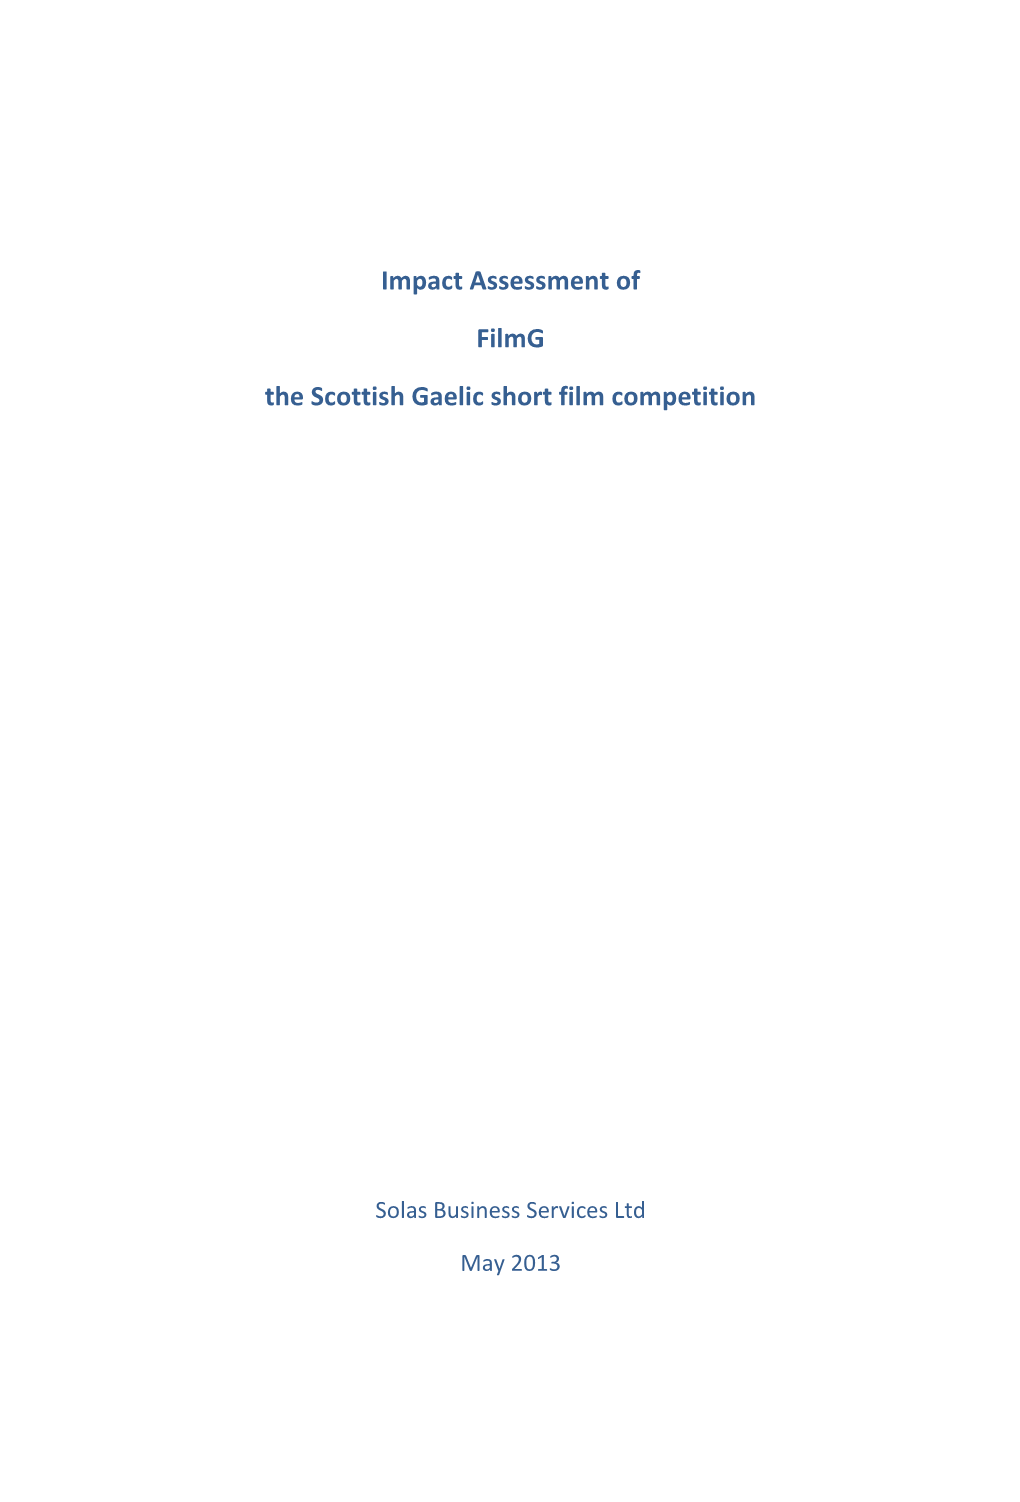 Impact Assessment of Filmg the Scottish Gaelic Short Film Competition